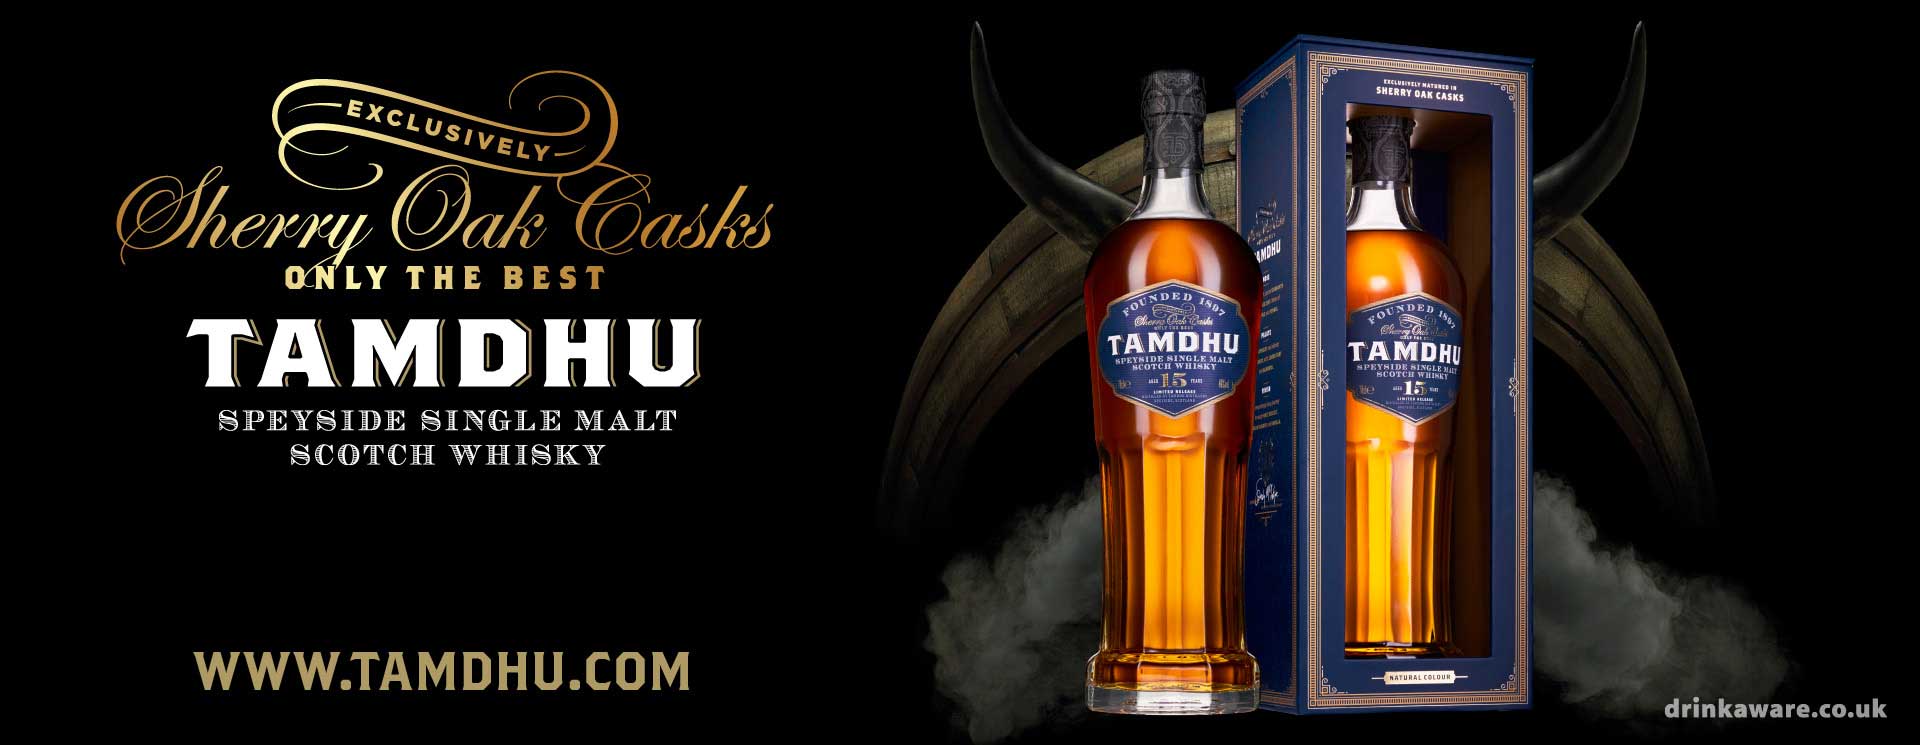 Tamdhu lanza su nuevo whisky Tamdhu 15 Year Old